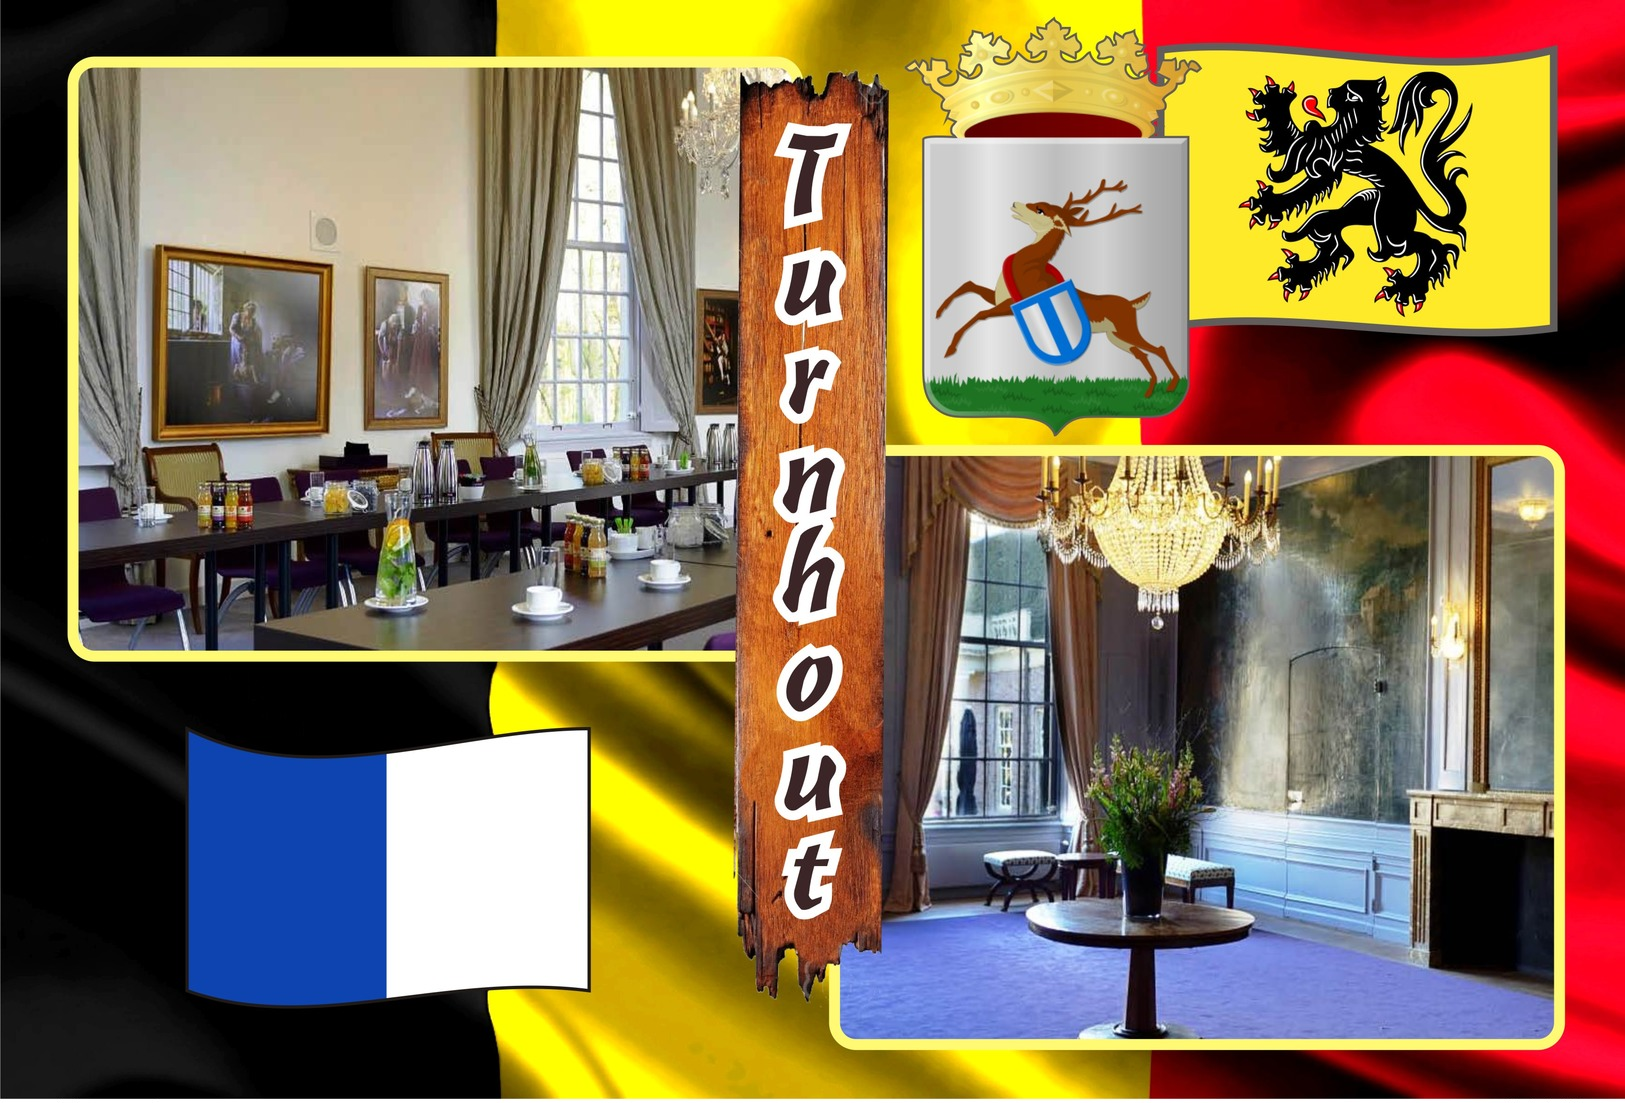 Postcards, REPRODUCTION, Municipalities of Belgium, Turnhout, duplex X, 50 pcs. (448 to 497)